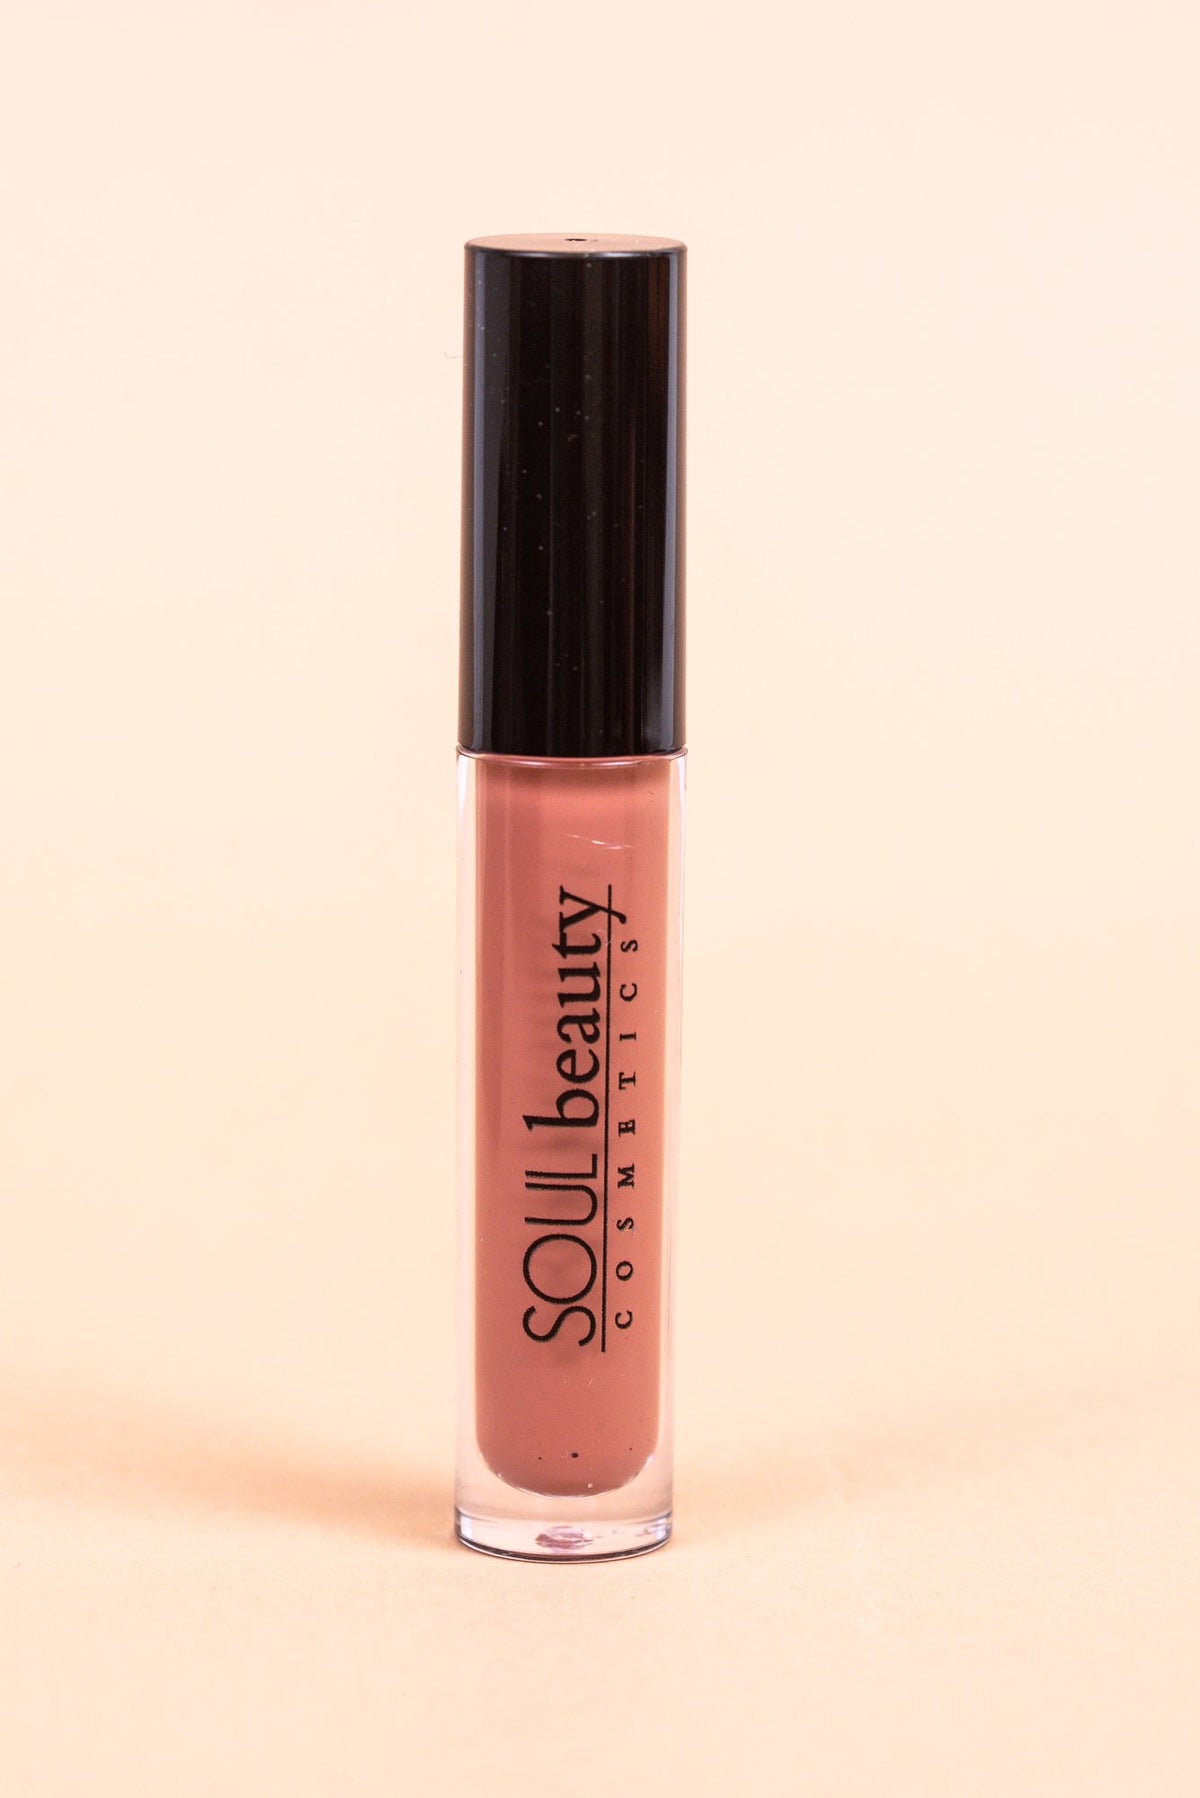 'Oh So Pretty' Pinky Nude Lip Gloss - LG05PNU